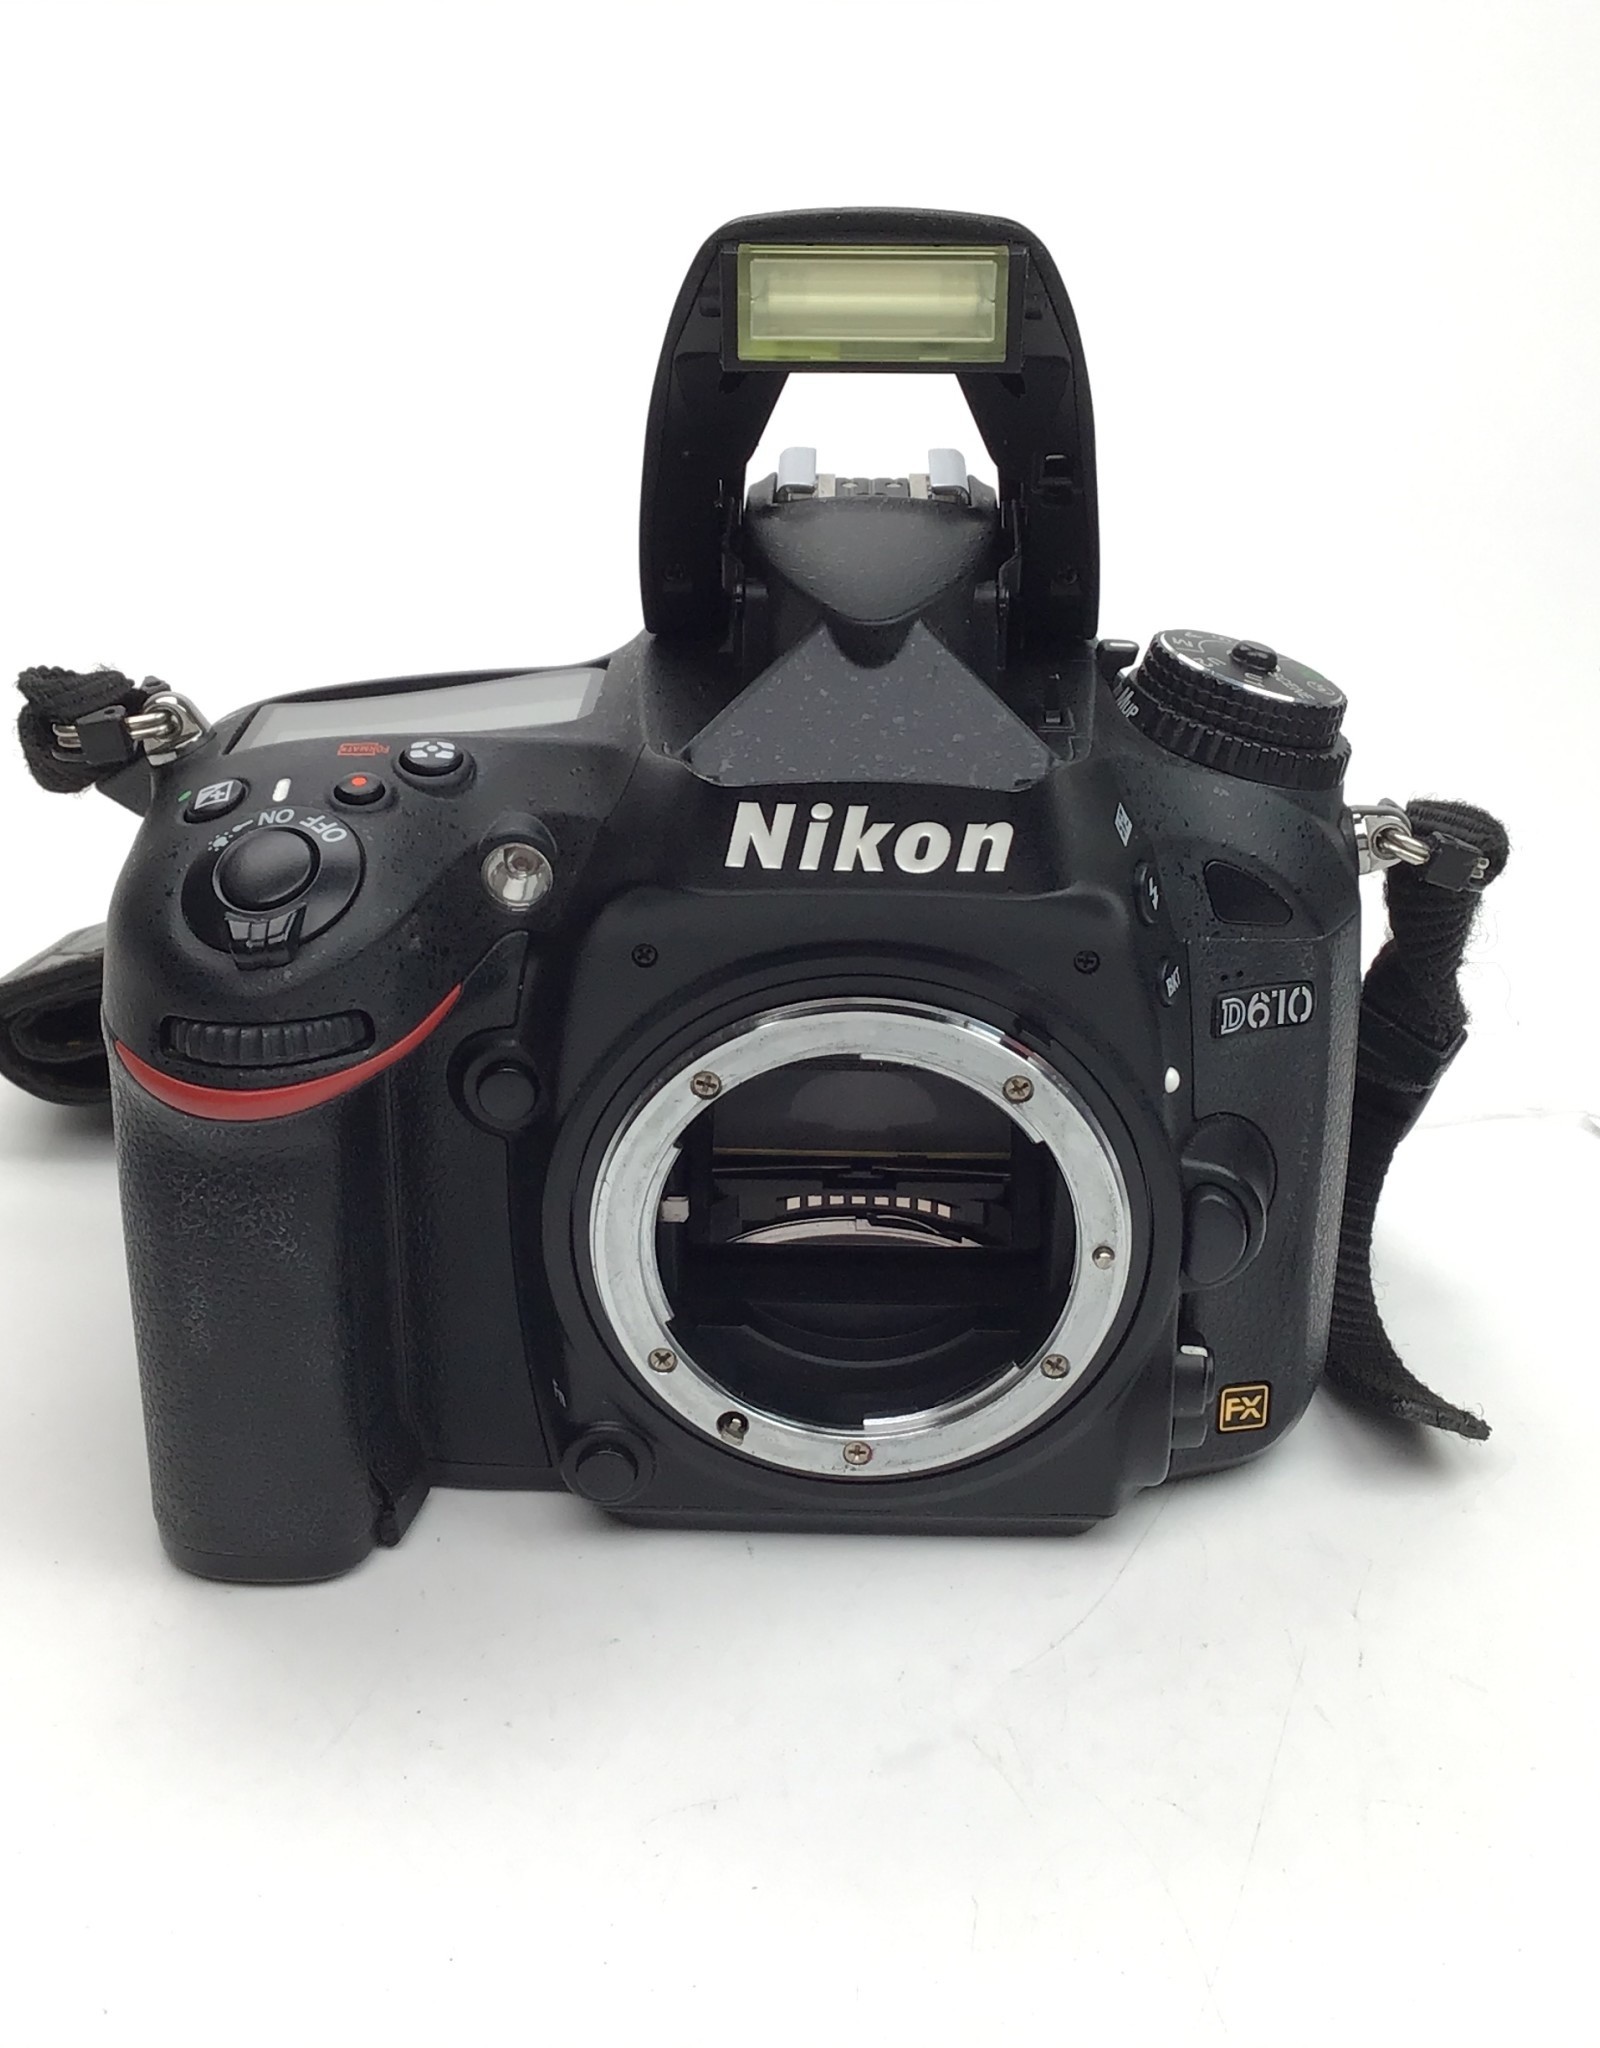 NIKON Nikon D610 Camera Body Shutter Count 10944 Used Good